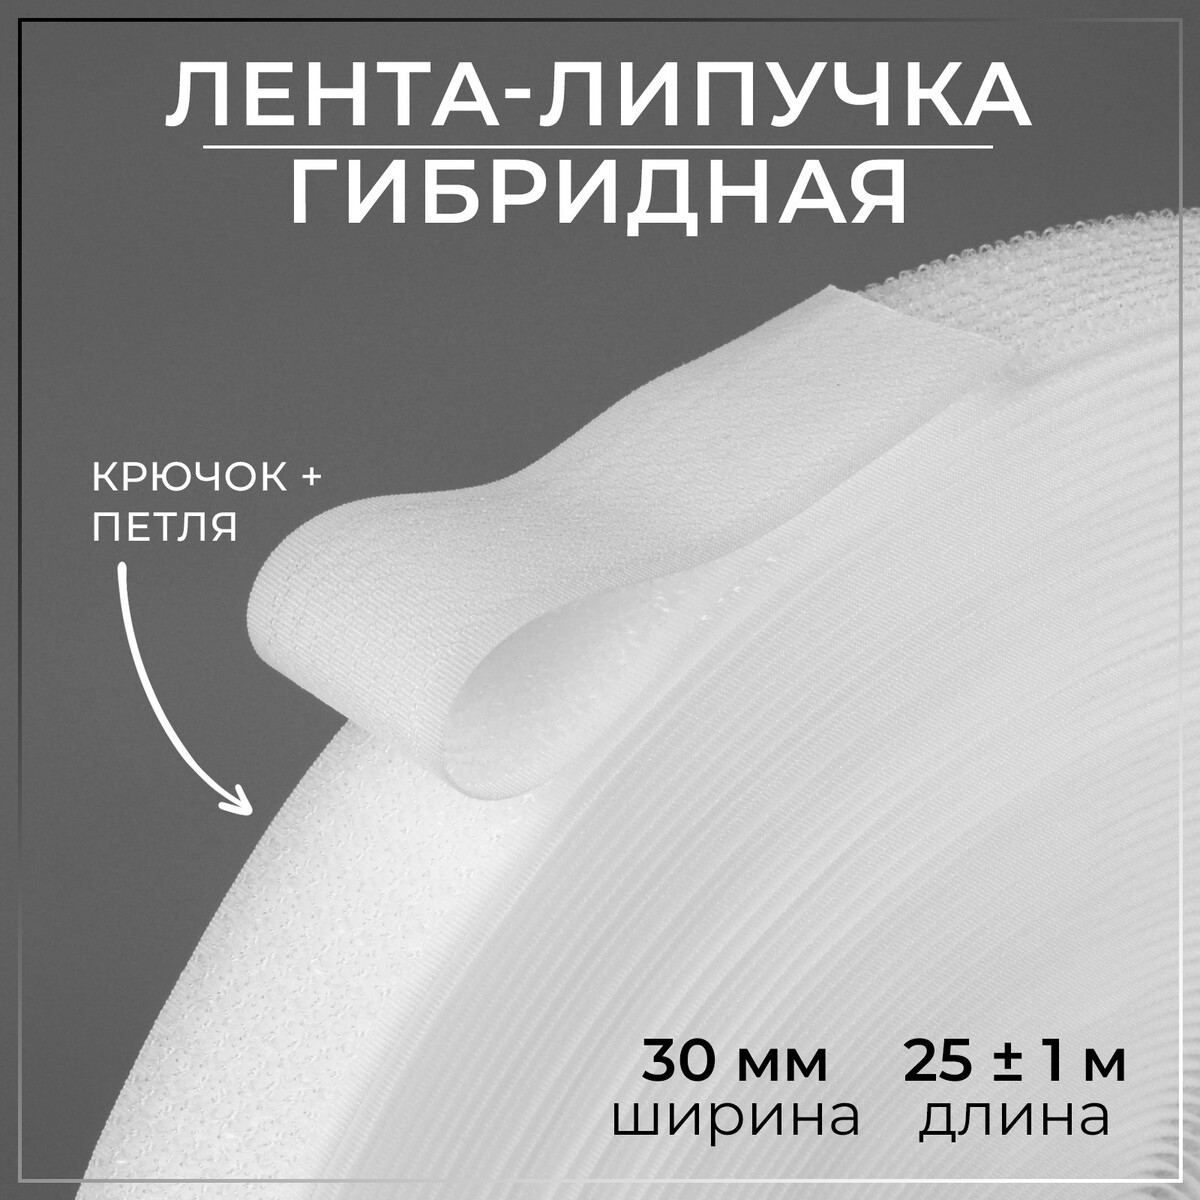 Липучка гибридная, 30 мм × 25 ± 1 м, цвет белый липучка 50 мм × 25 ± 1 м